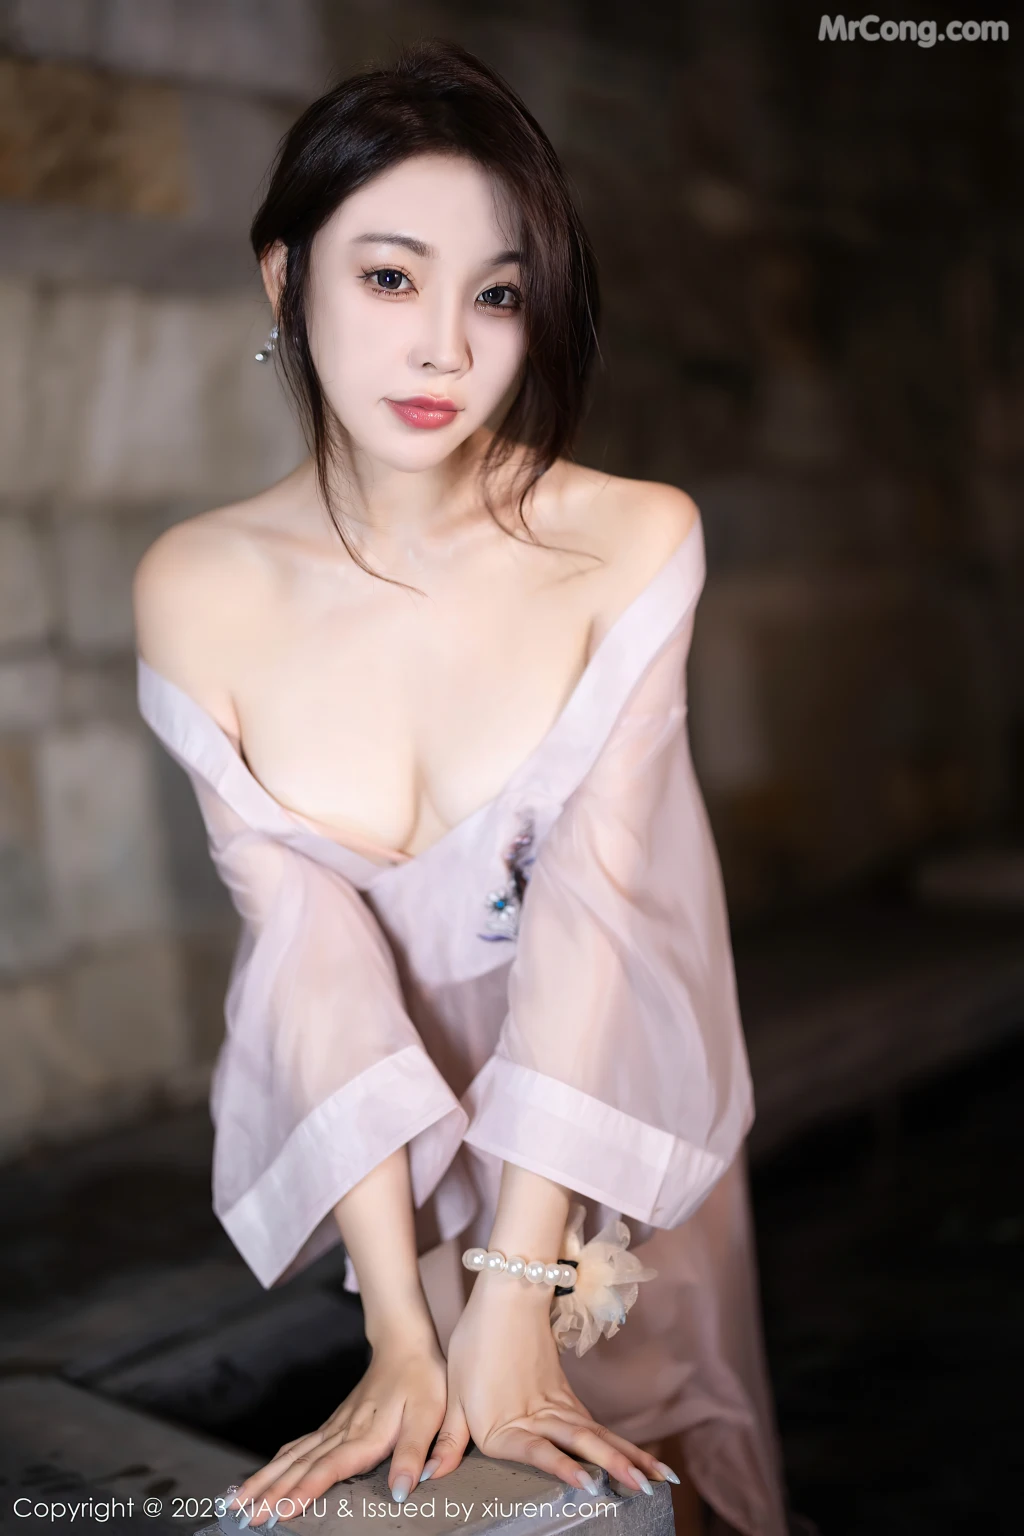 XiaoYu Vol.1076: 徐莉芝Booty (85 photos)